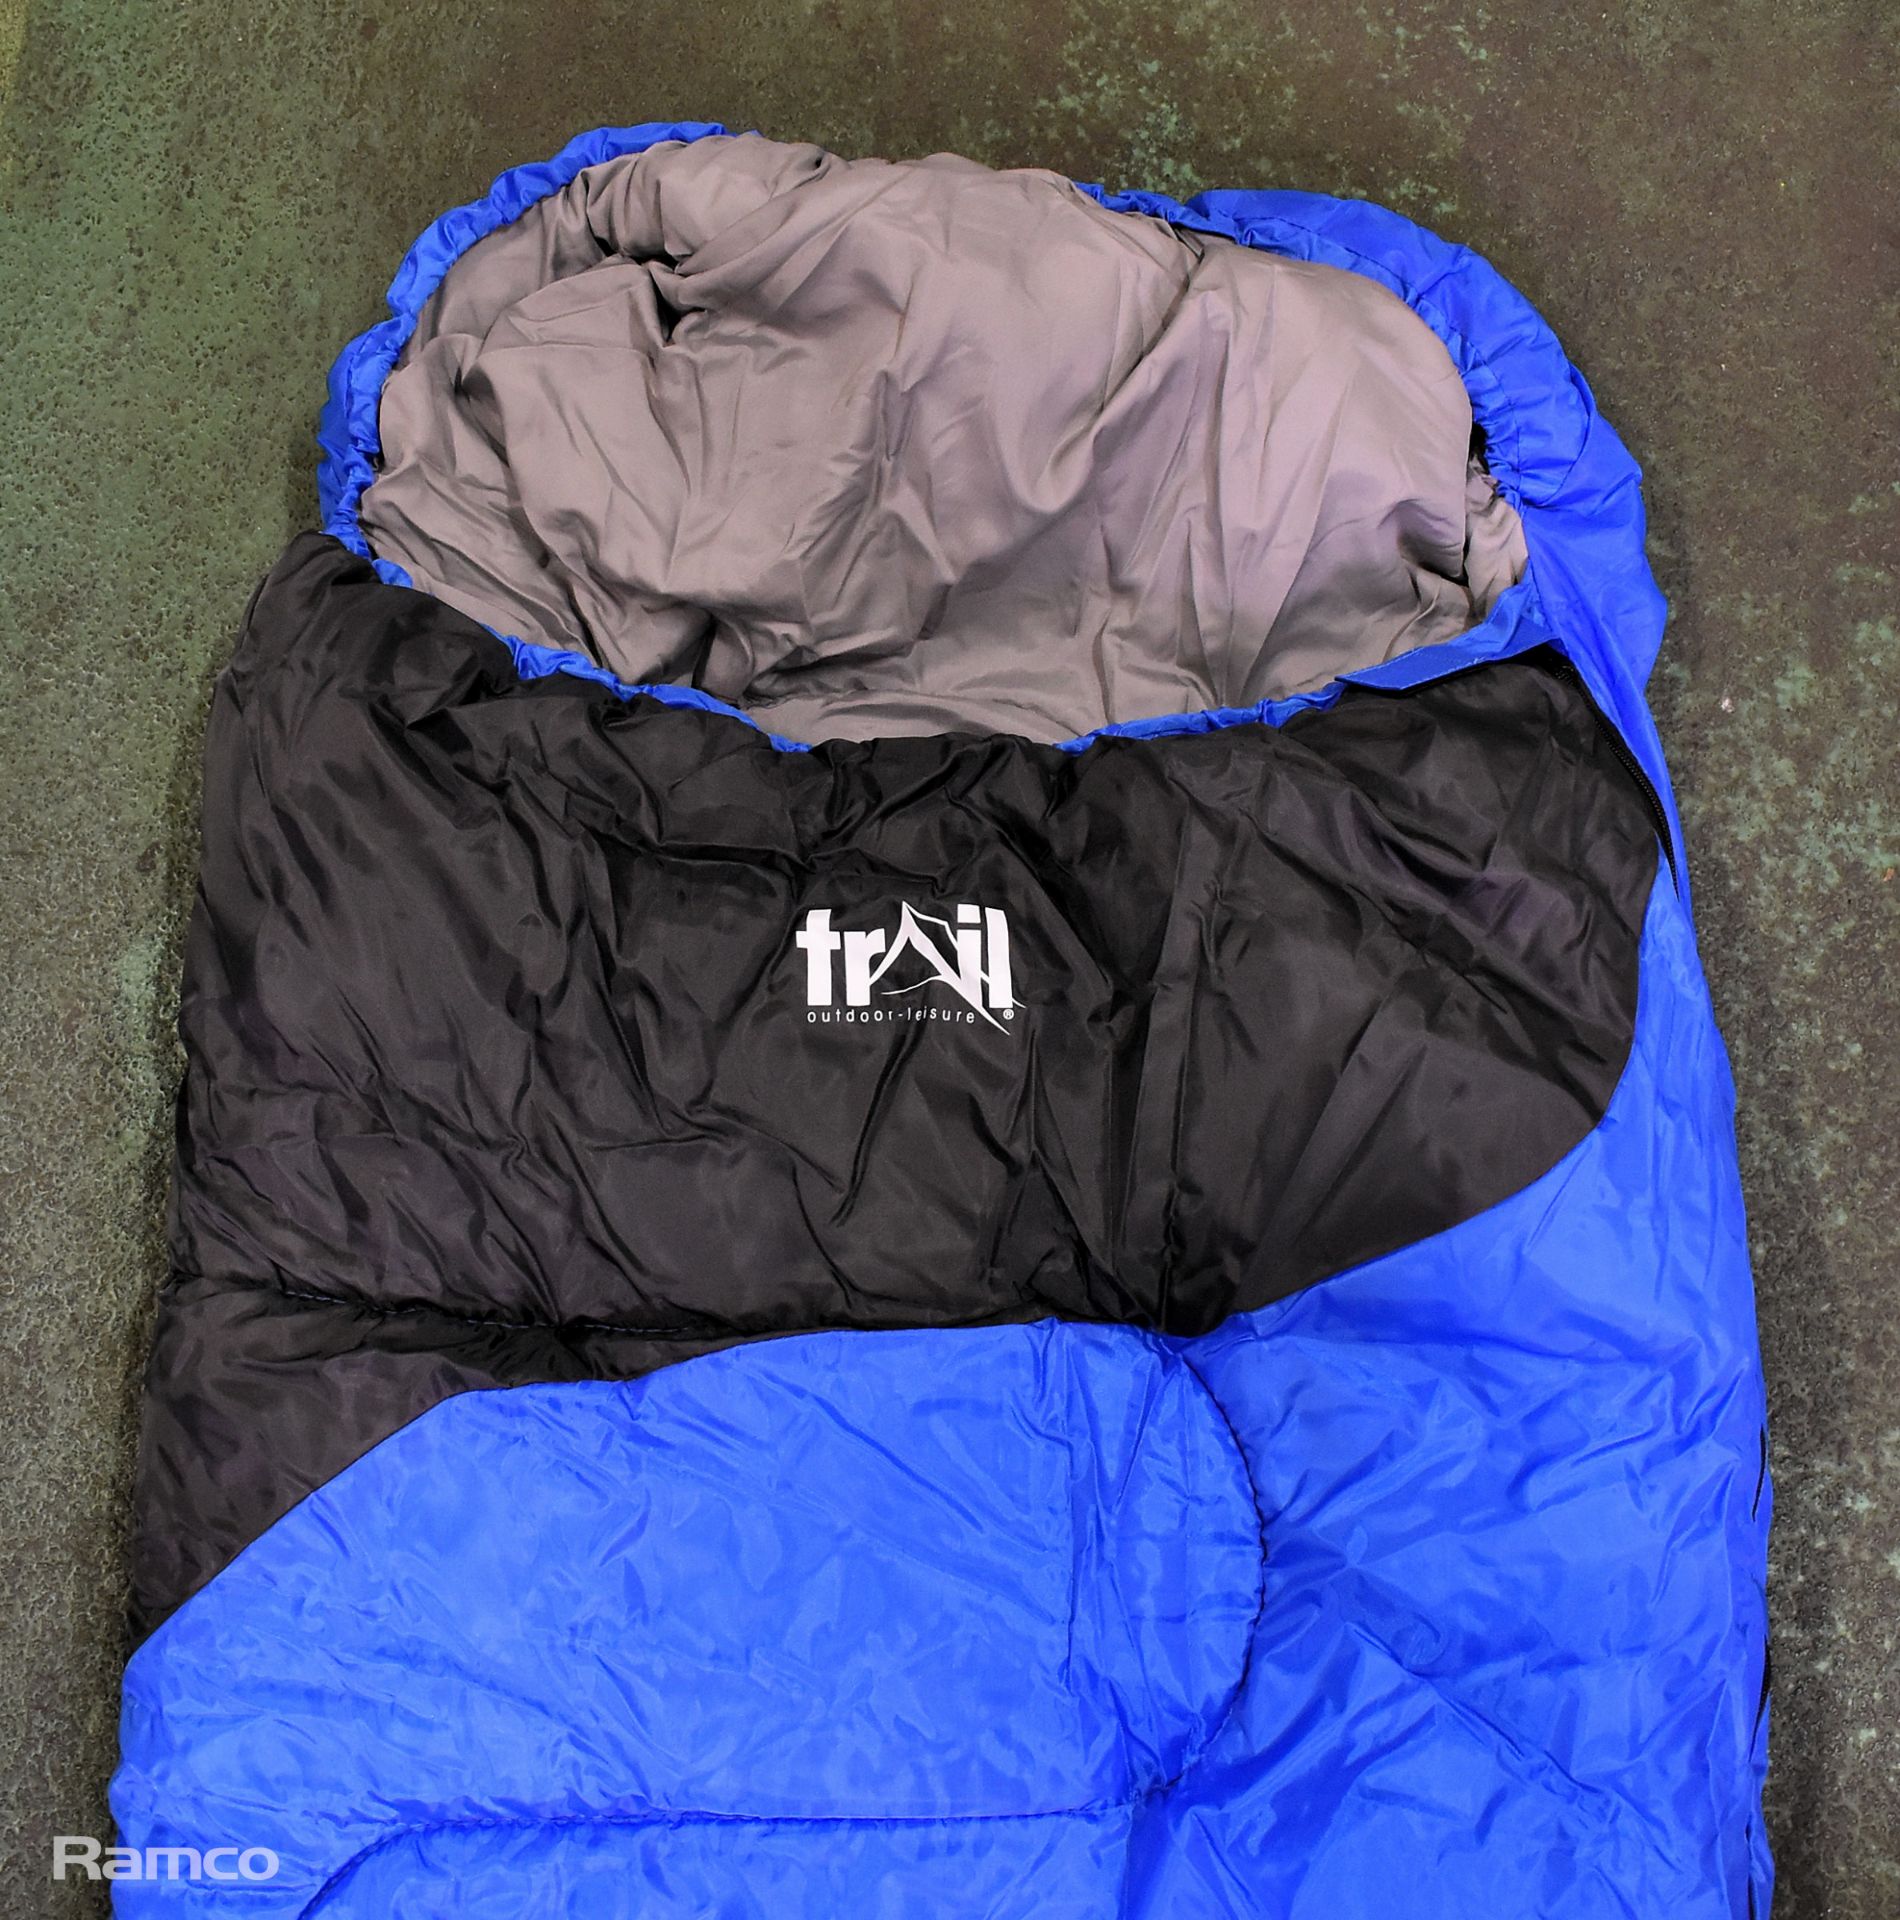 Overnight adventure outdoor sleeping bag in a rucksack - Image 4 of 6